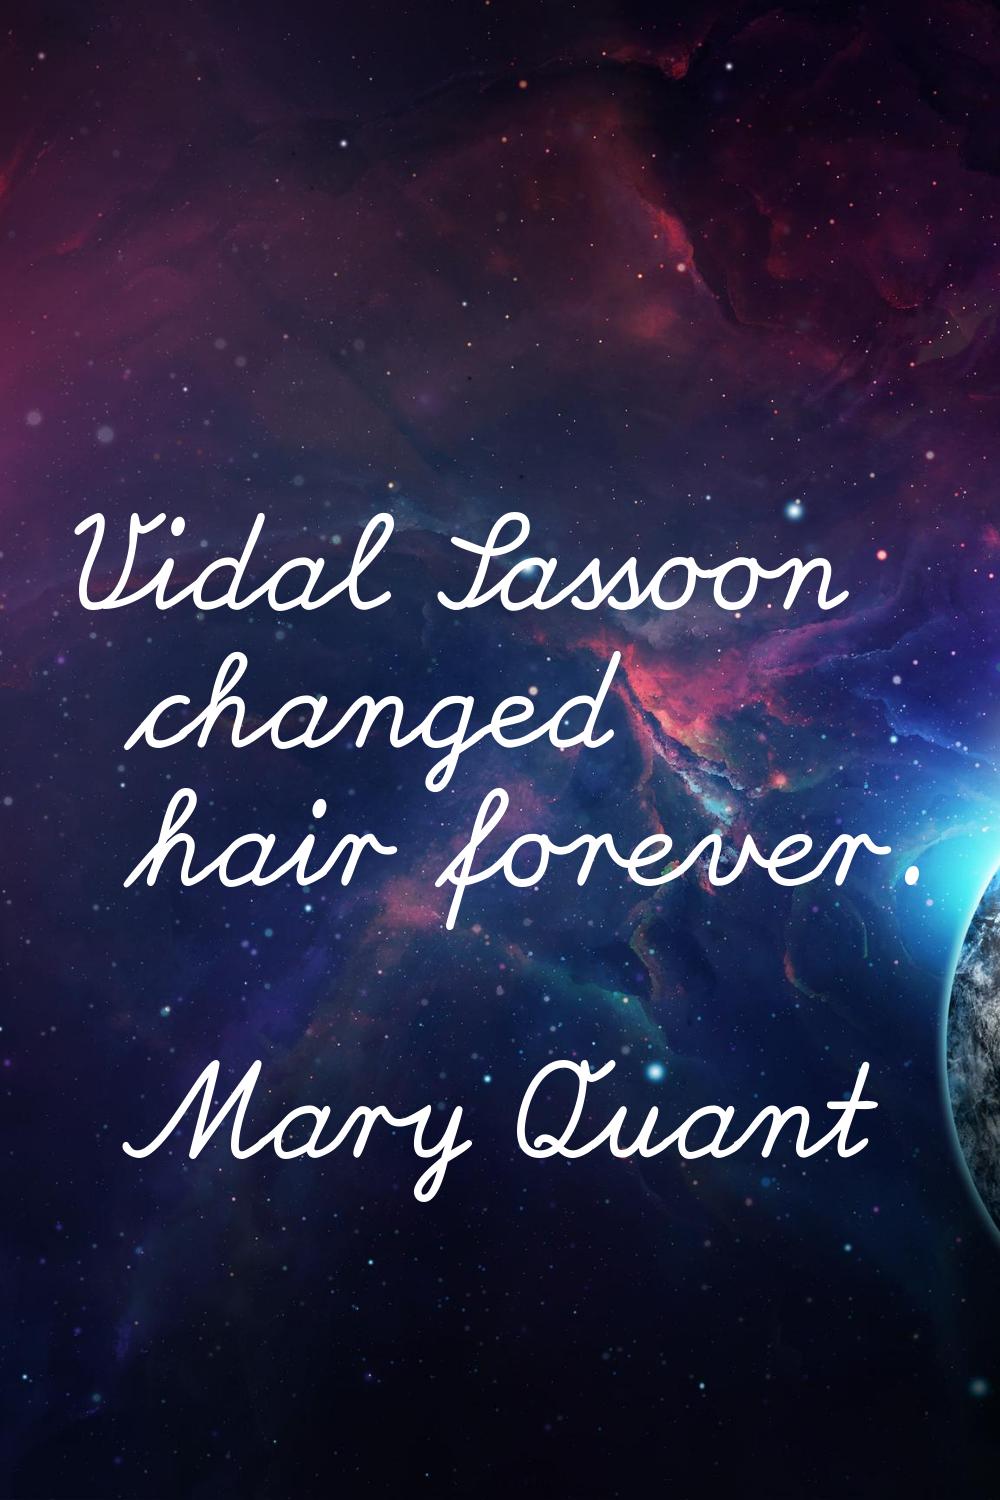 Vidal Sassoon changed hair forever.